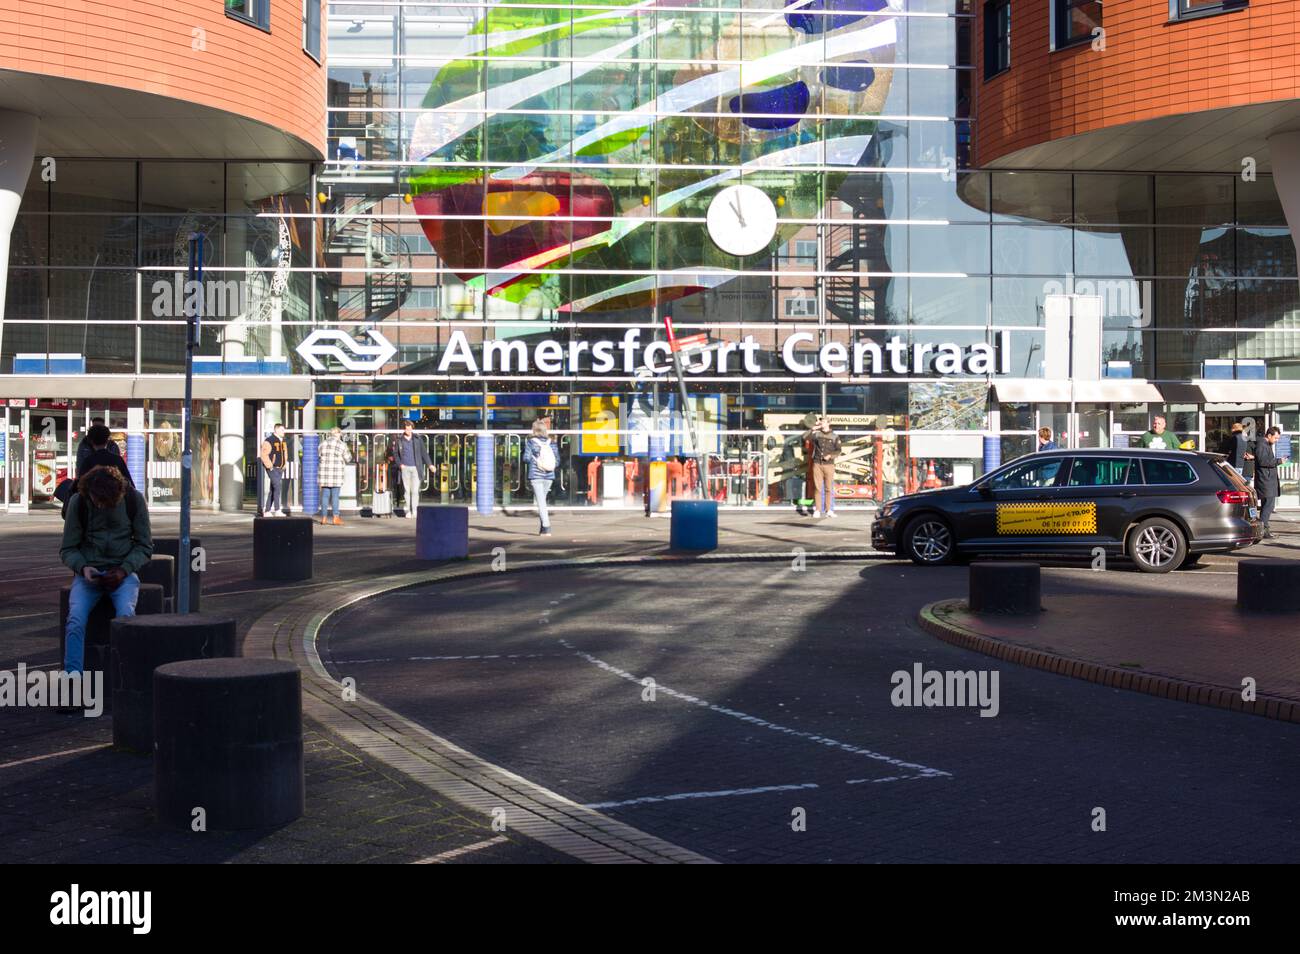 Amersfoort, Netherlands - November 13, 2022: Main entrance of central station Amersfoort with people Stock Photo